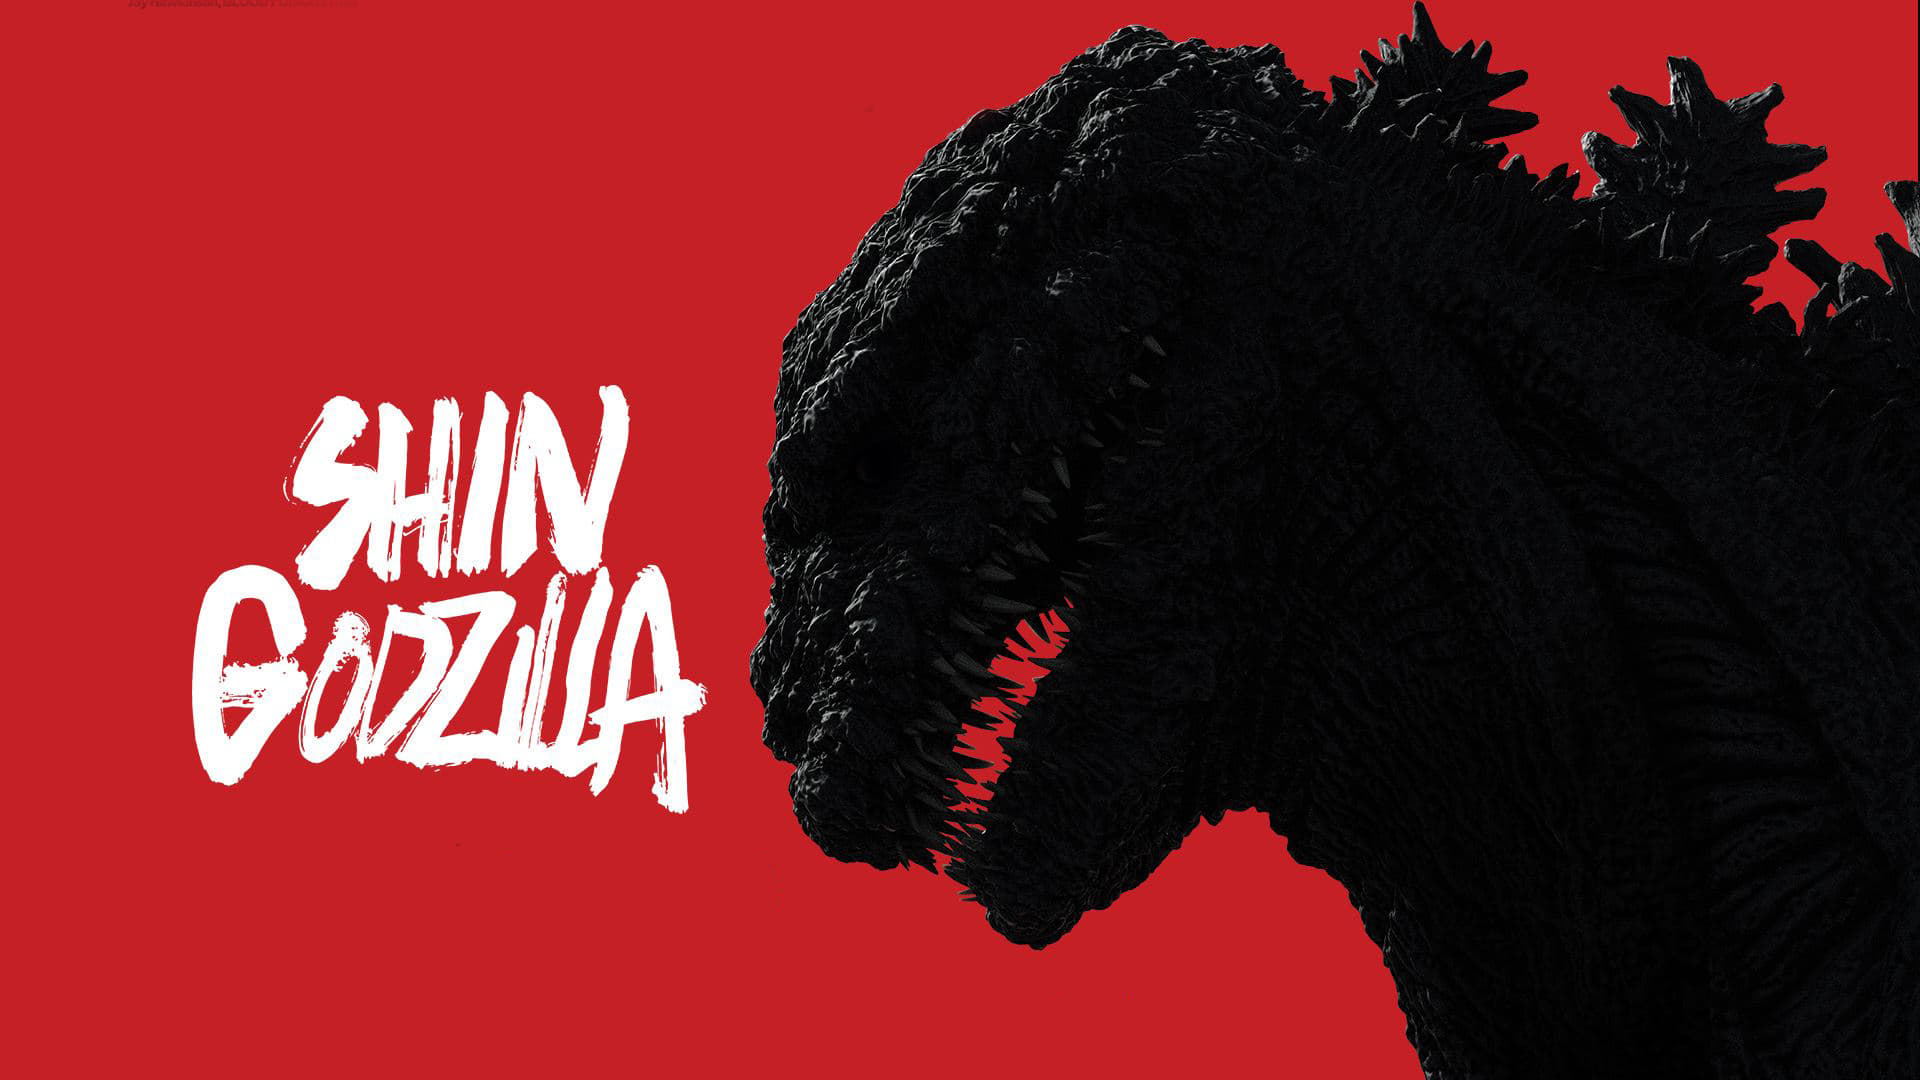 Godzilla Returns